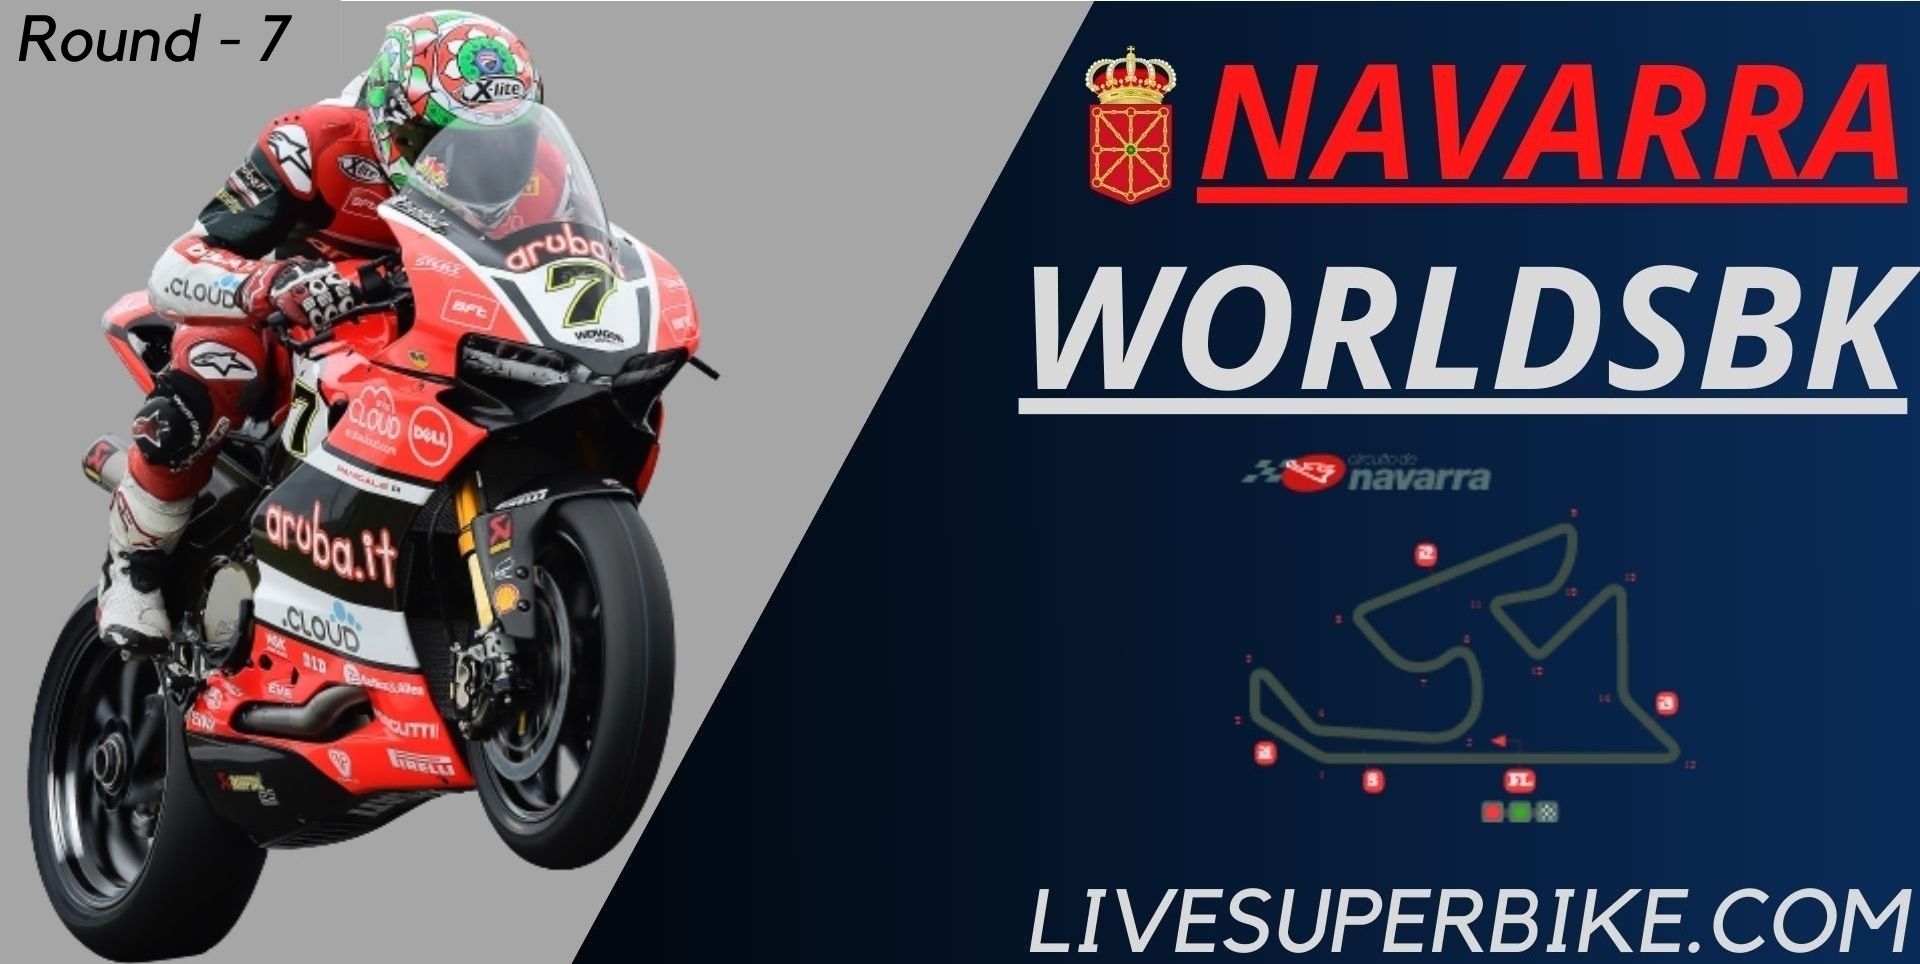 pirelli-navarra-round-7-superbike-live-stream